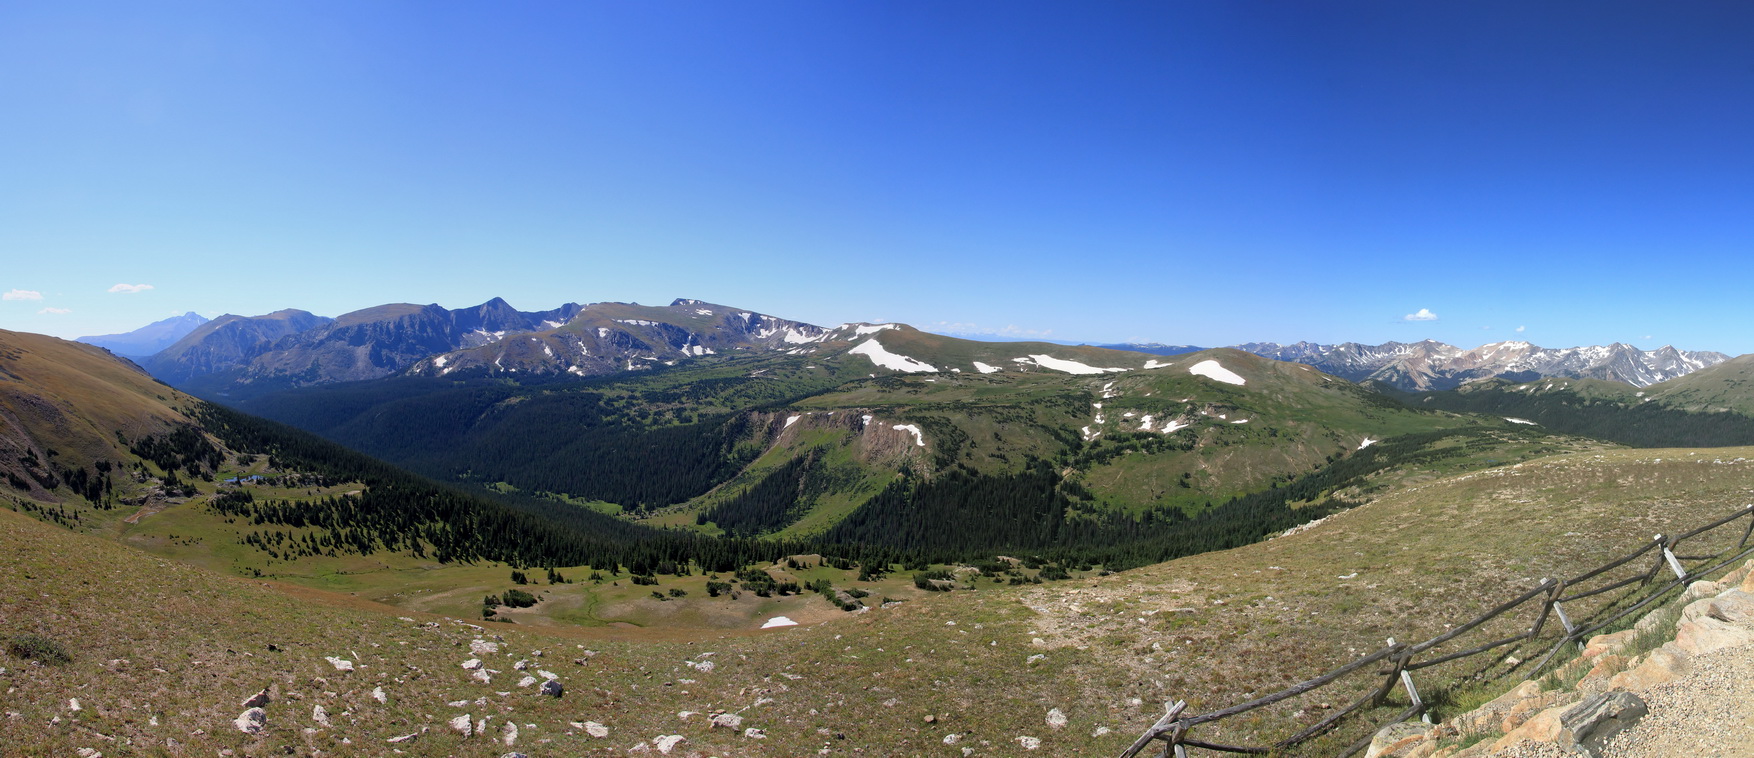 IMG_3143_stitch.jpg : 2011년 8월 Rocky Mountain National Park